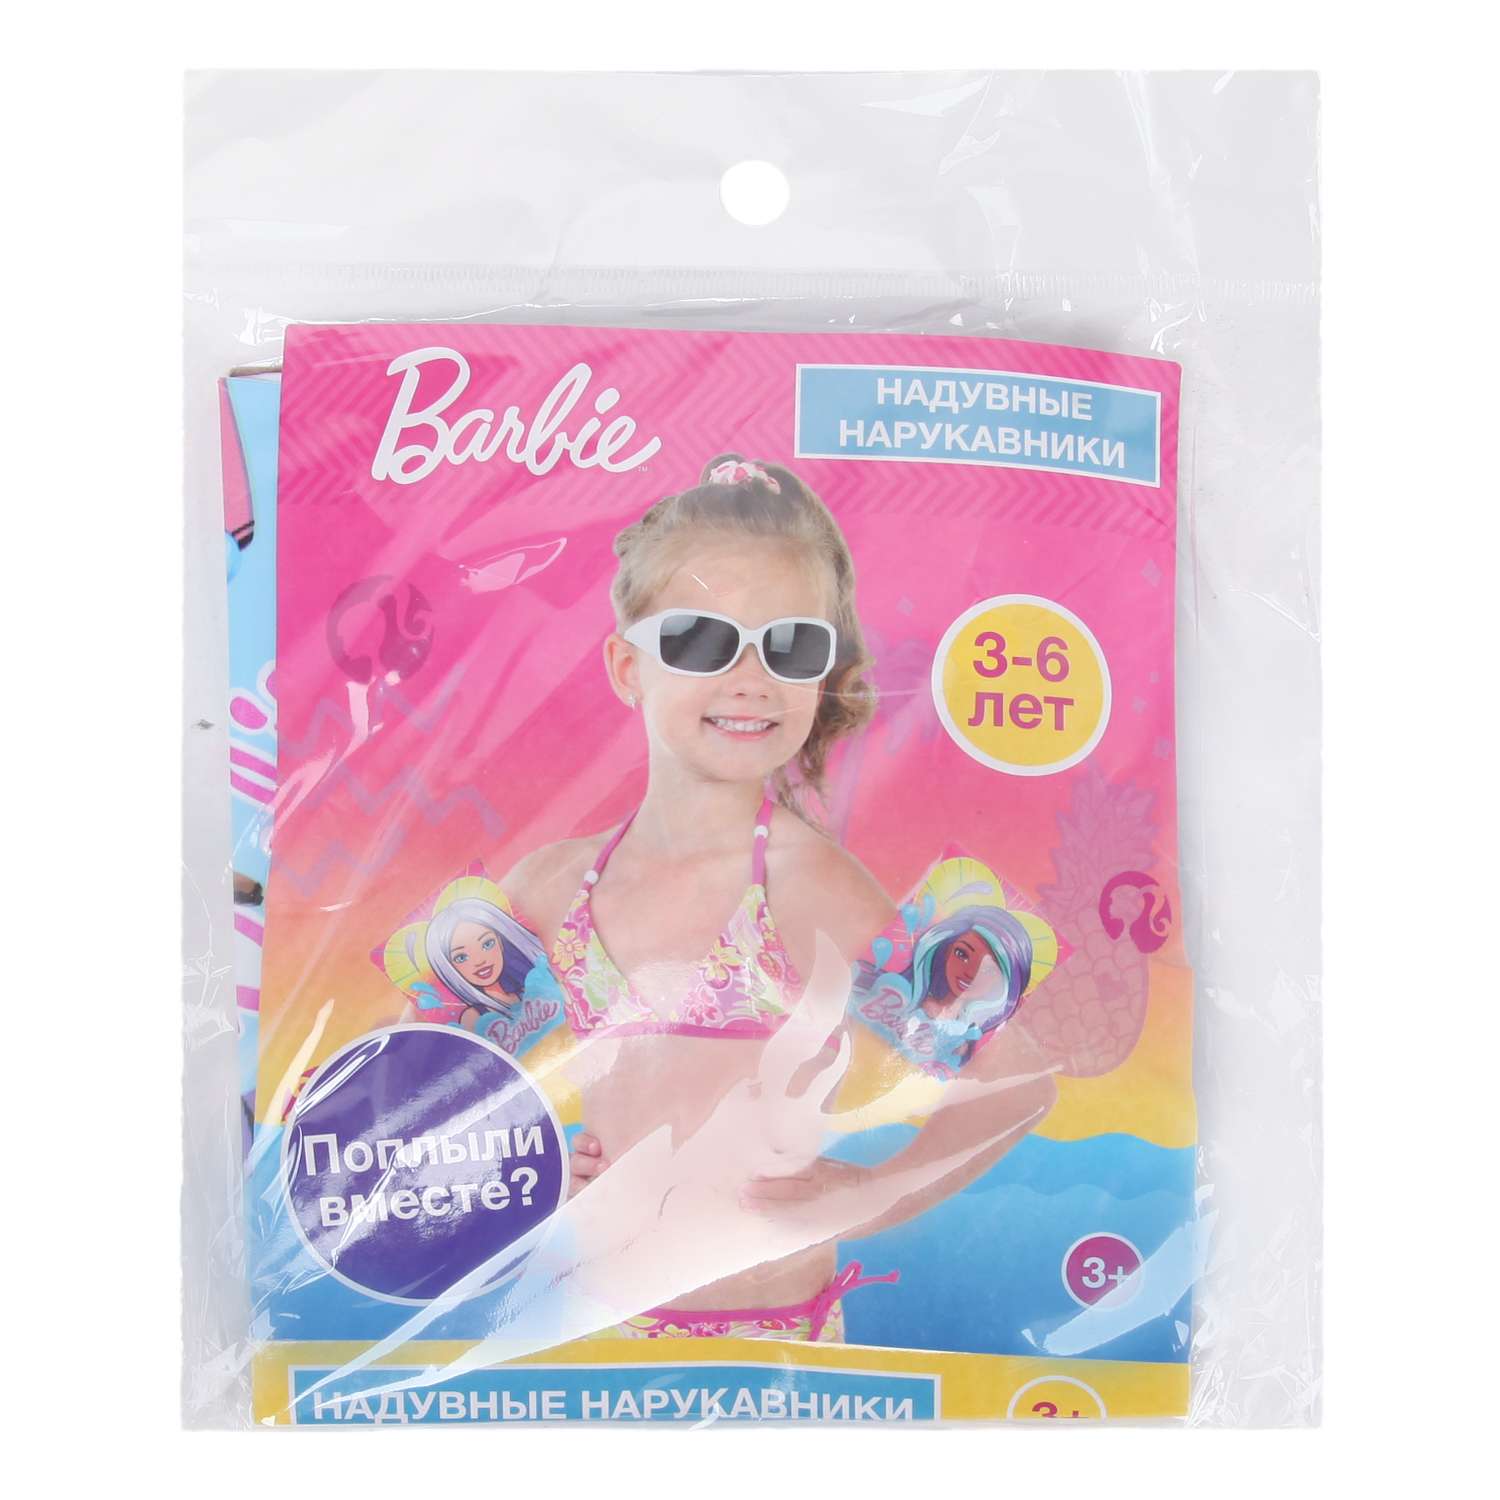 Нарукавники Barbie OXSQ-5 - фото 2